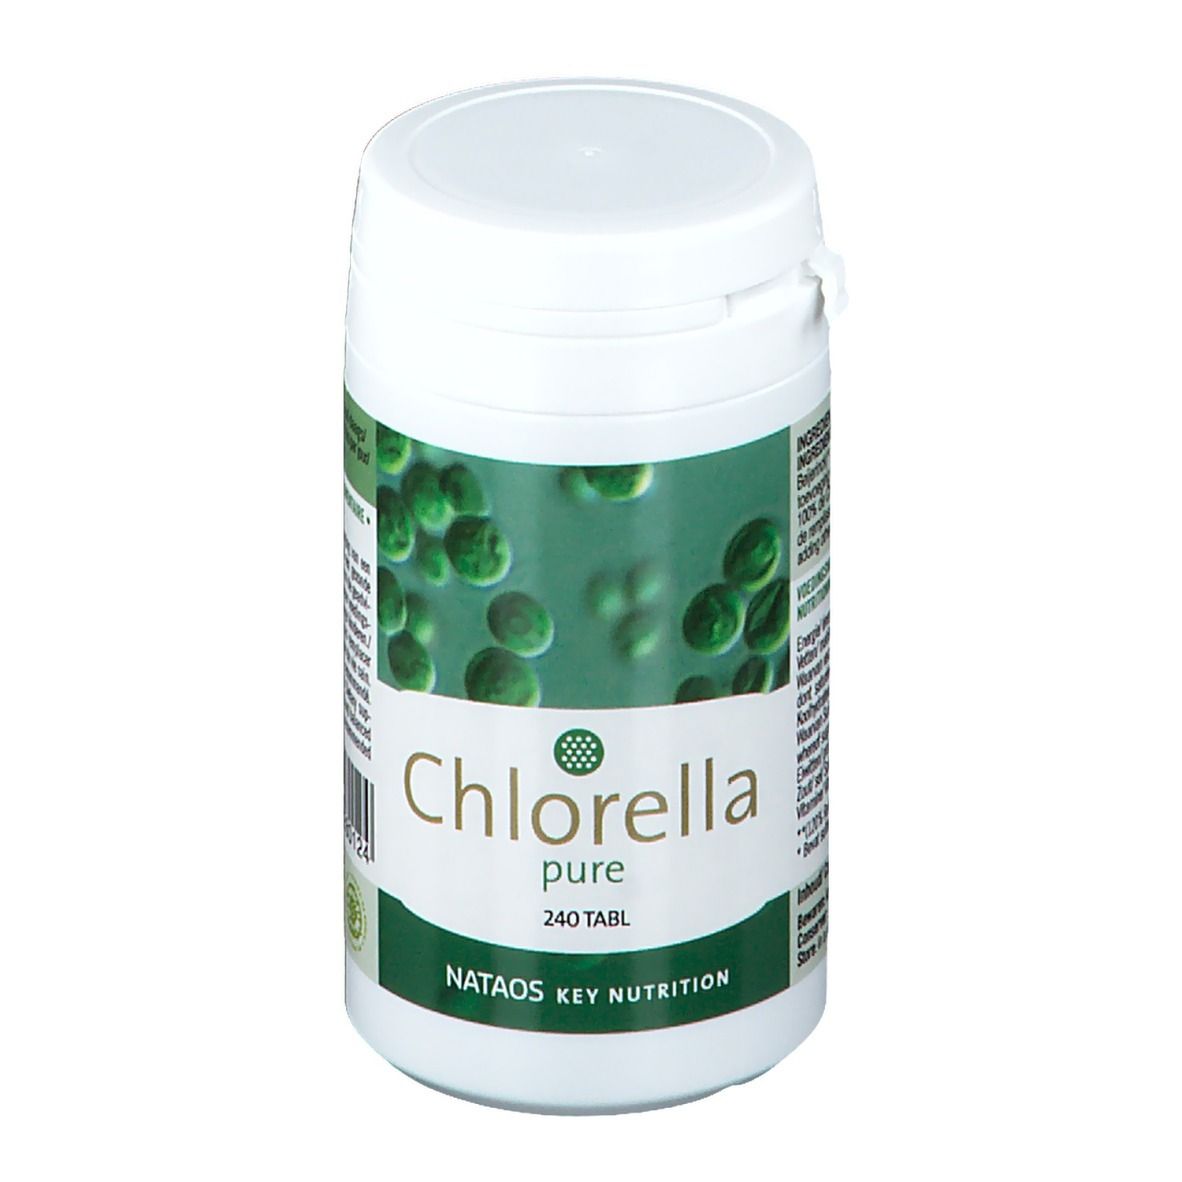 Nataos Key Nutrition Chlorella Pure